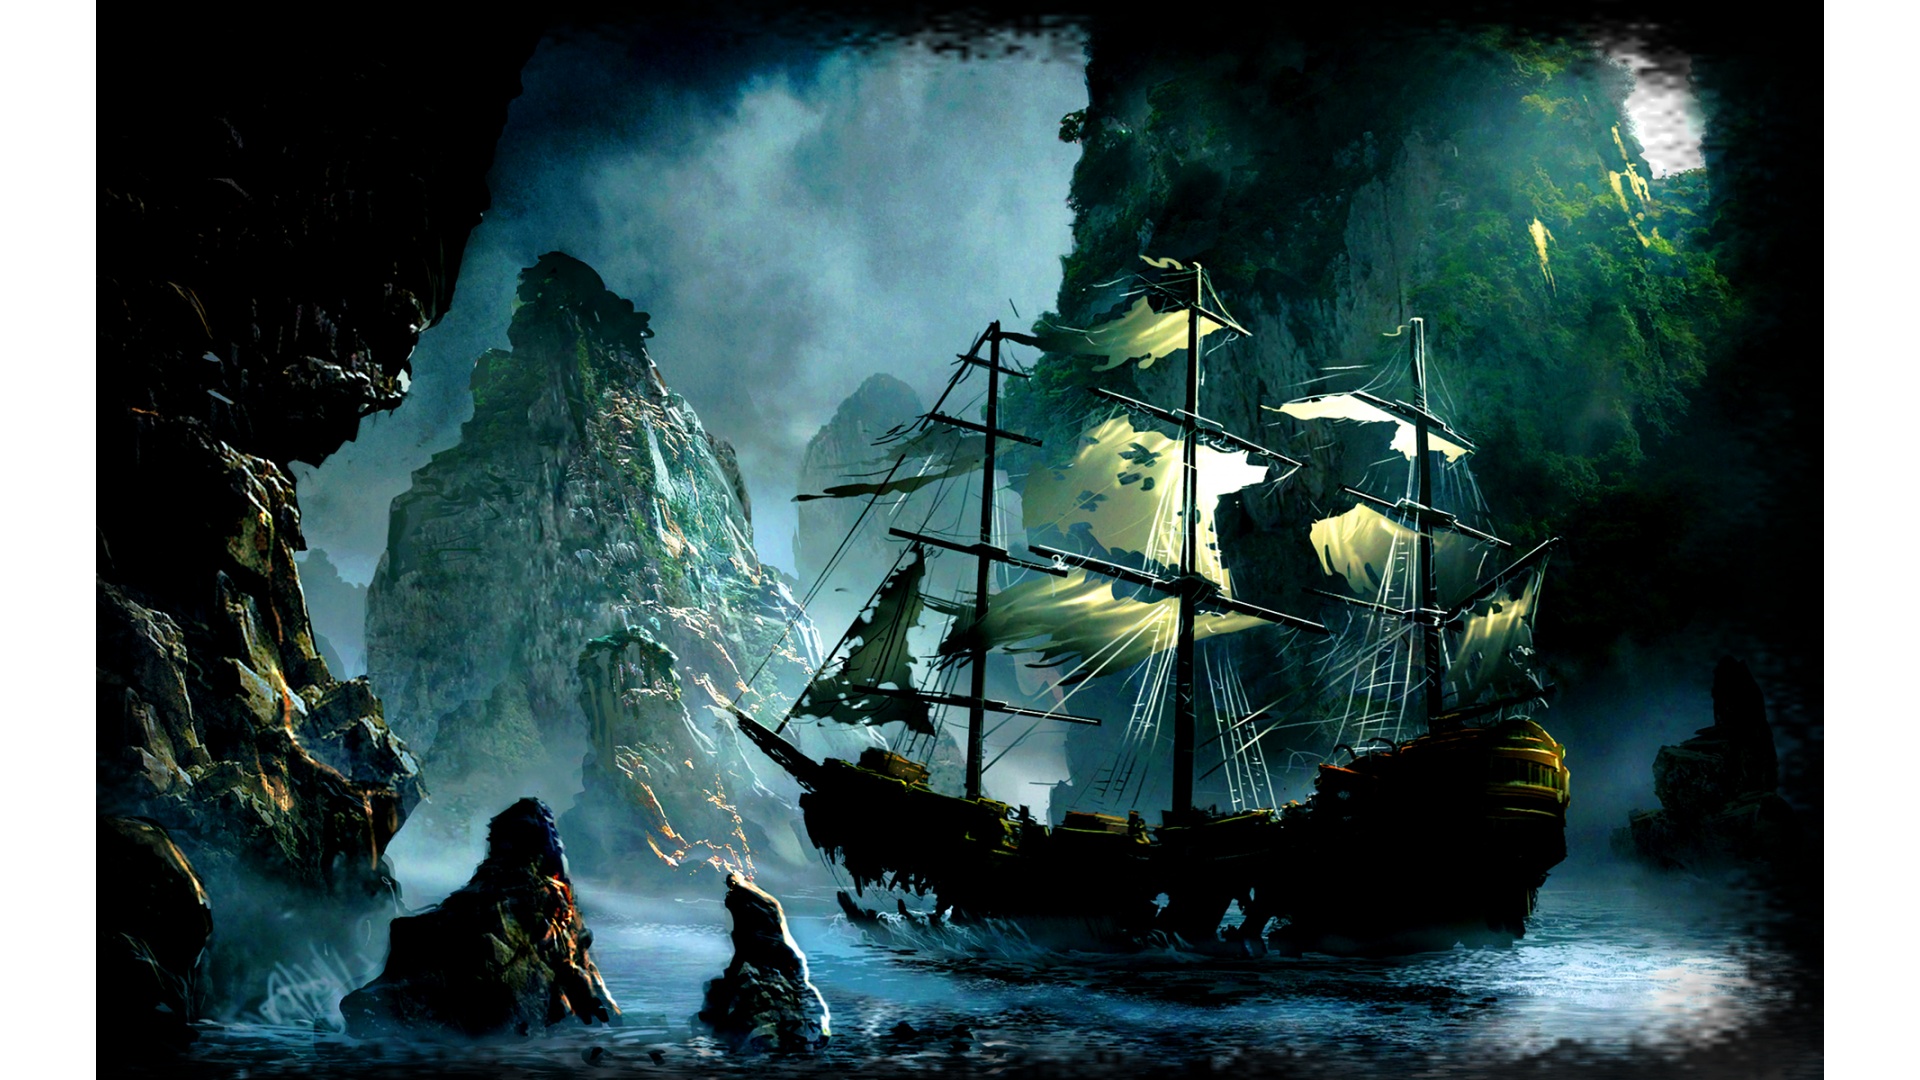  tags sea ship rocks fantasy world imaginary pirate ship ghost ship